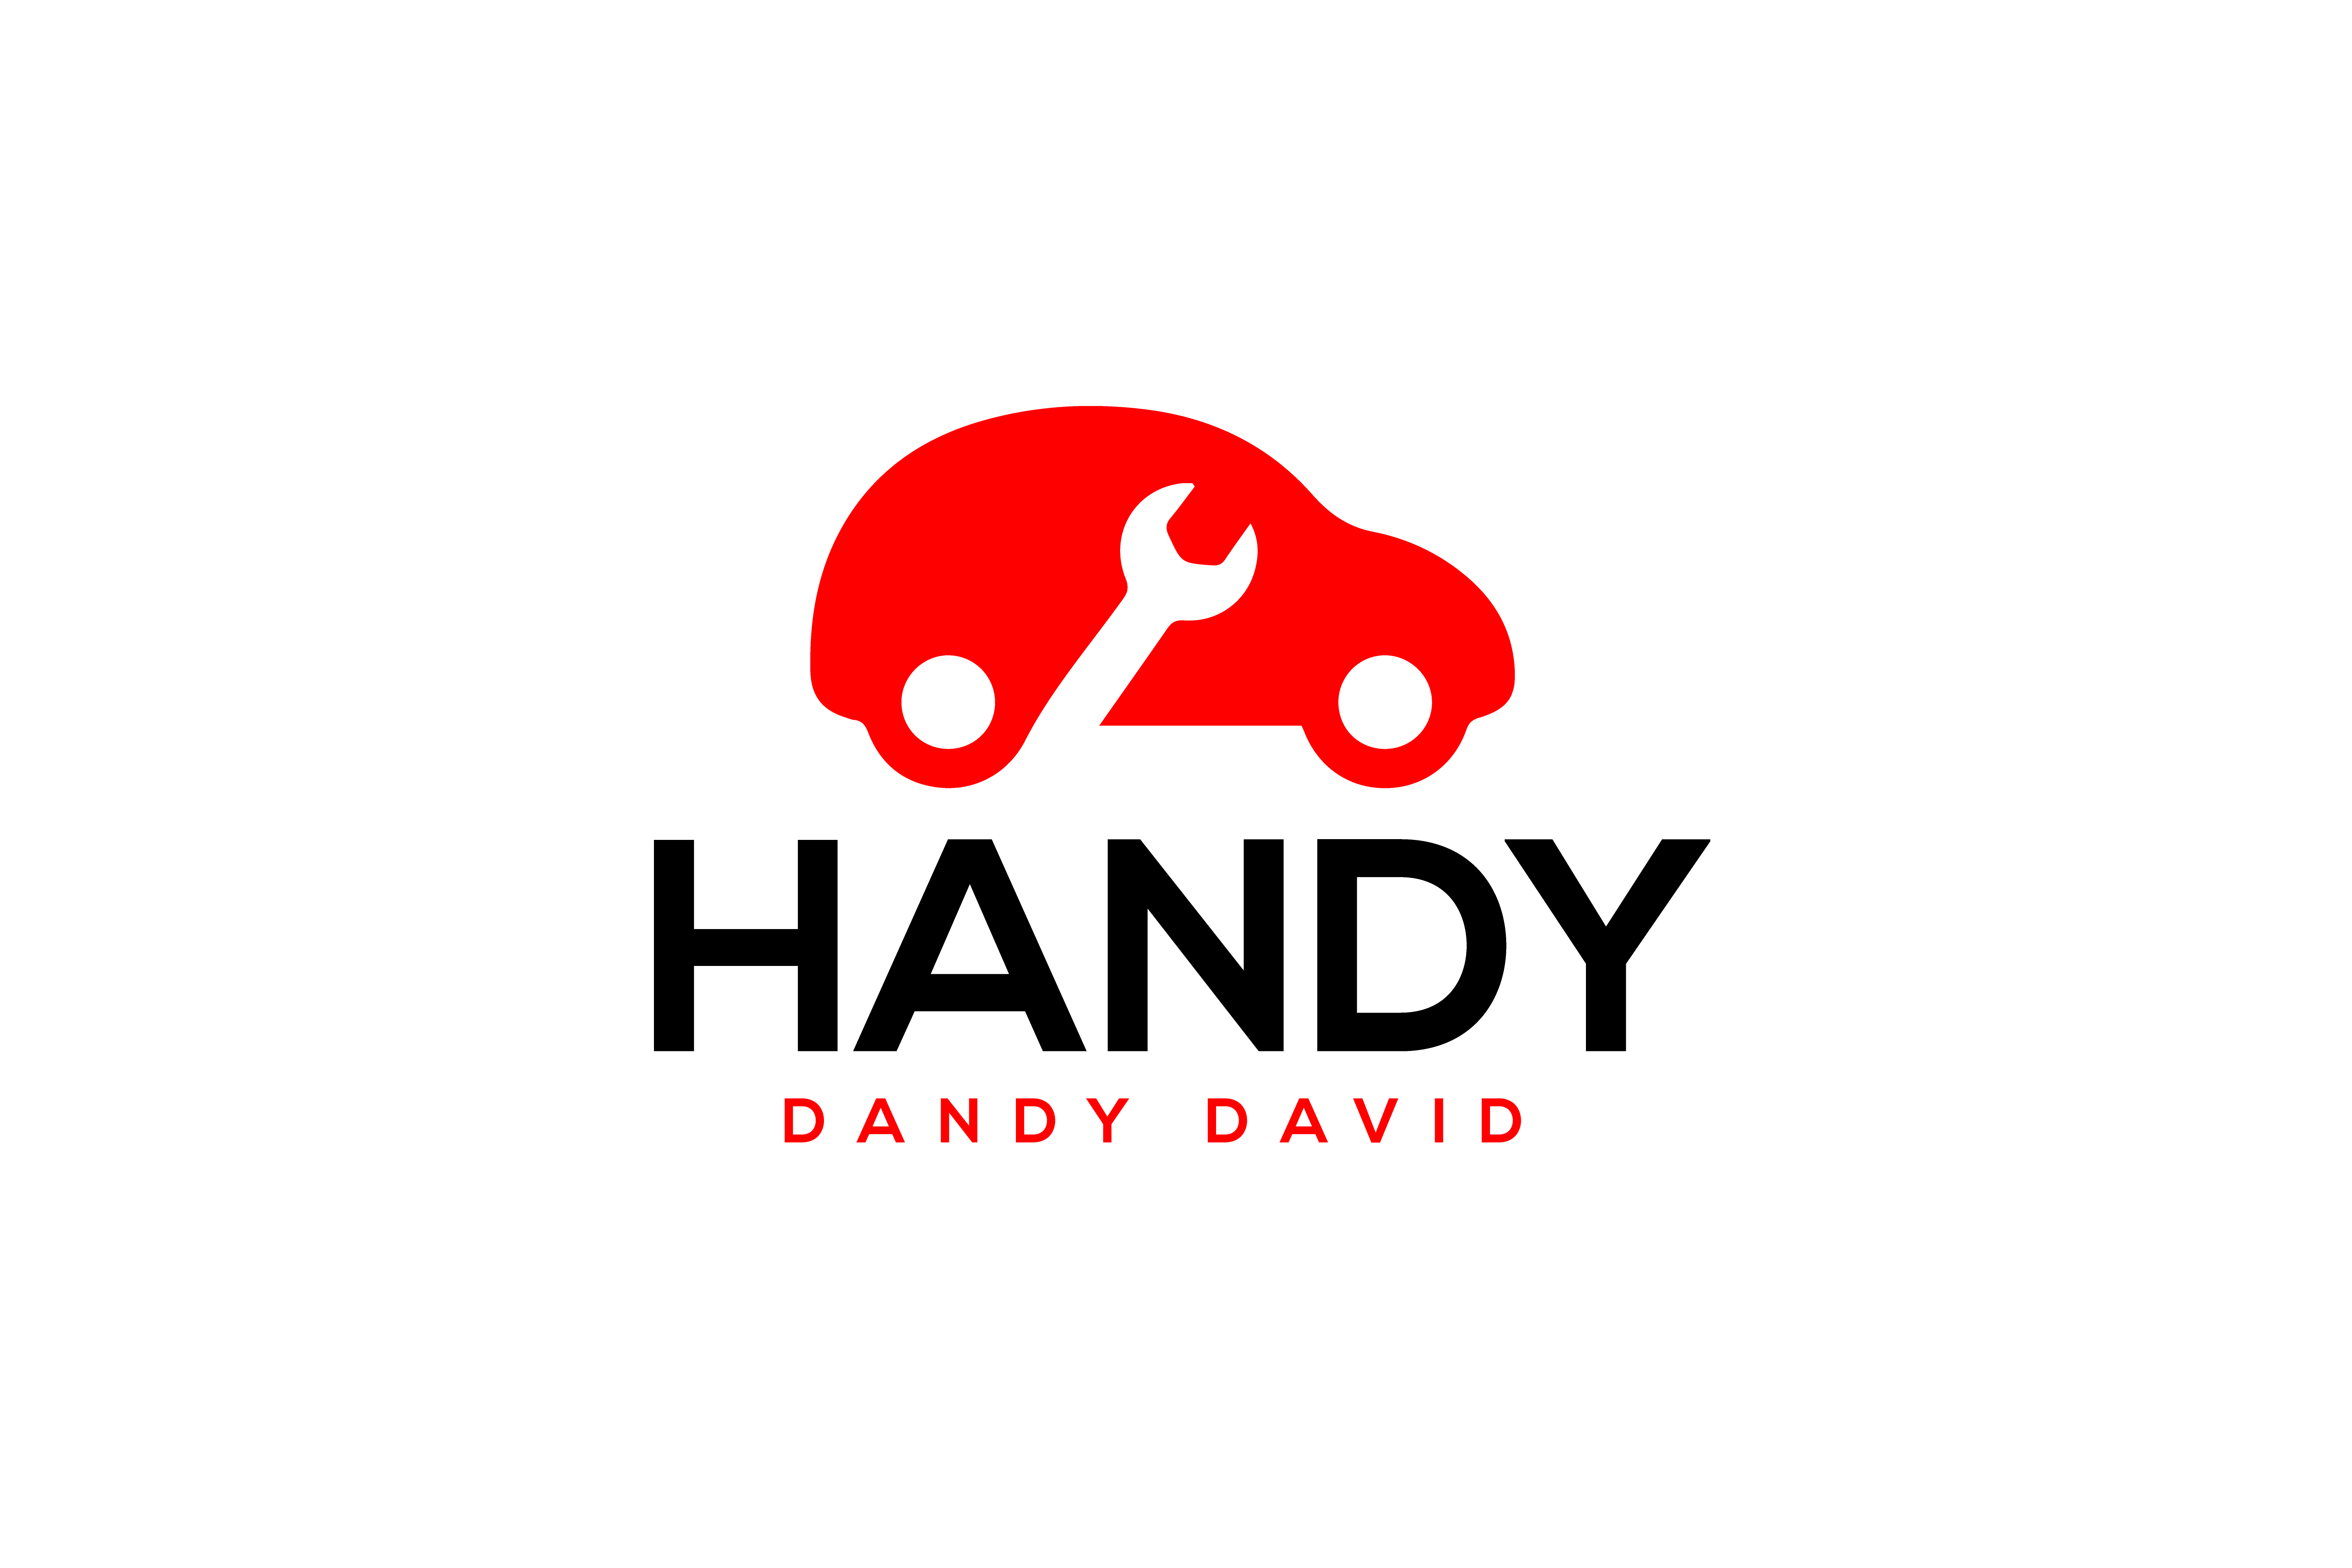 Handy Dandy David Mobile Mechanic